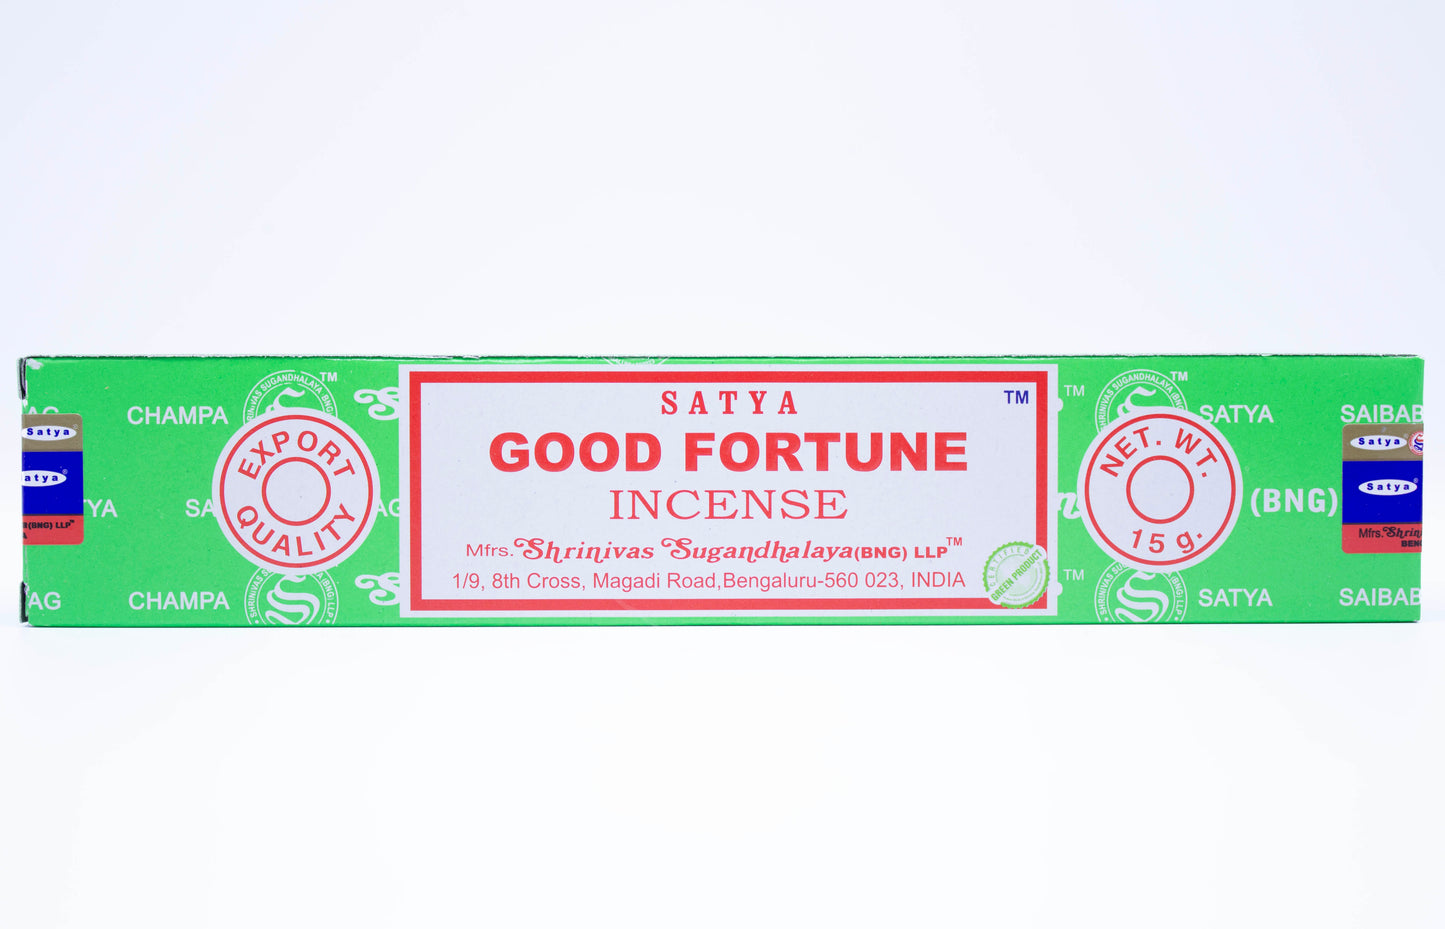 Satya Incense Good Fortune